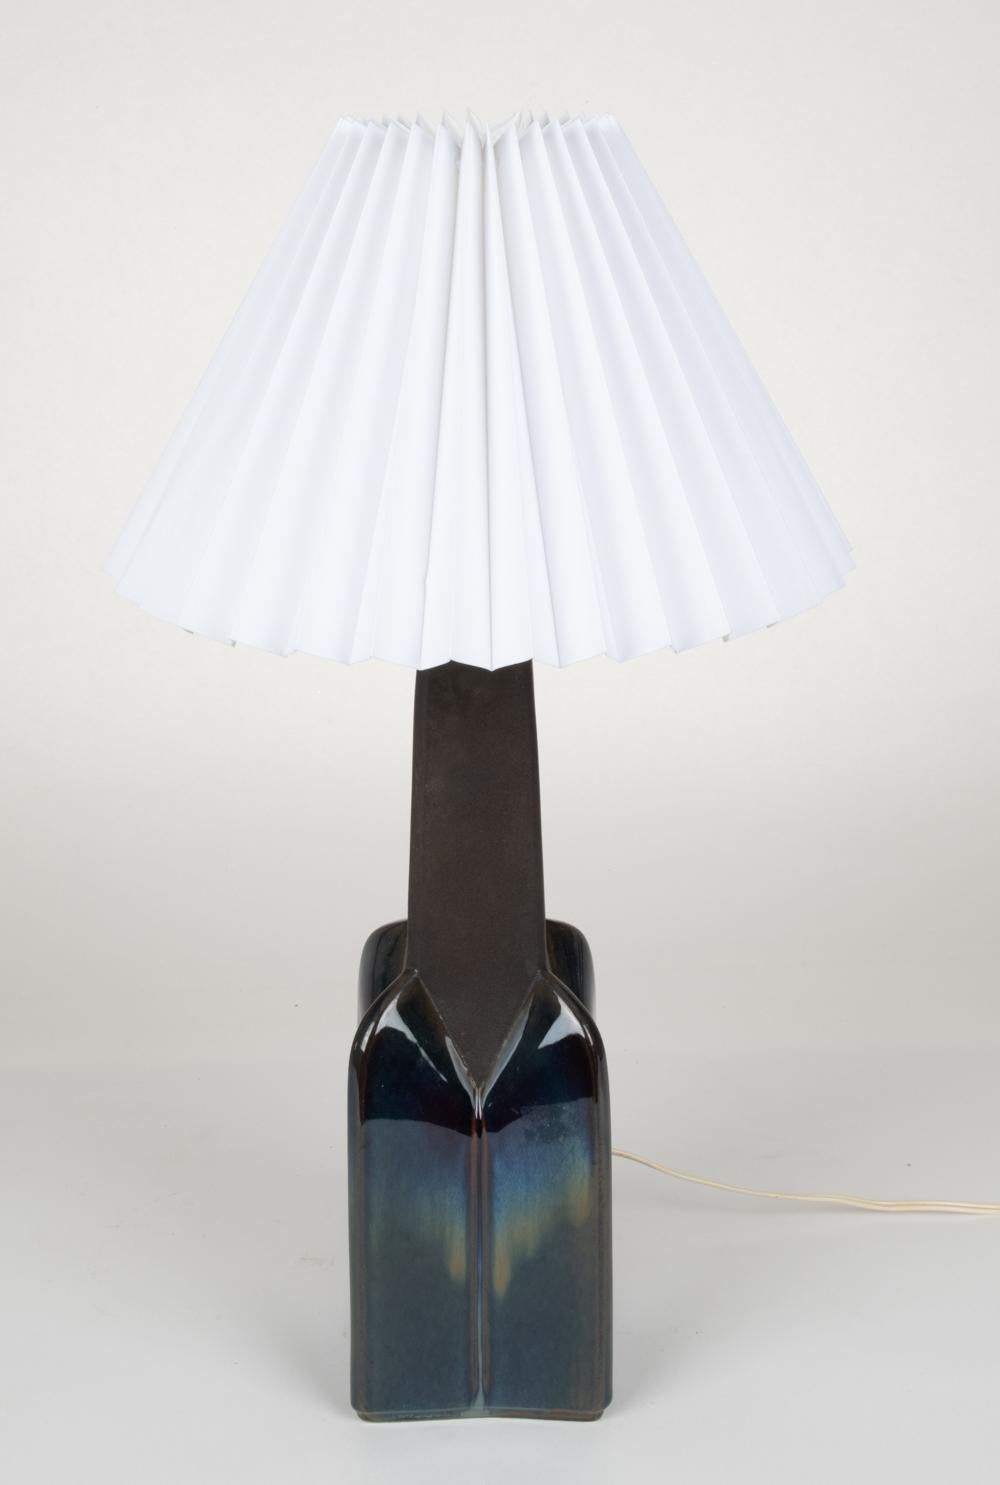 Scandinavian Modern Søholm Stentøj Ceramic Table Lamp, Denmark, 1960s